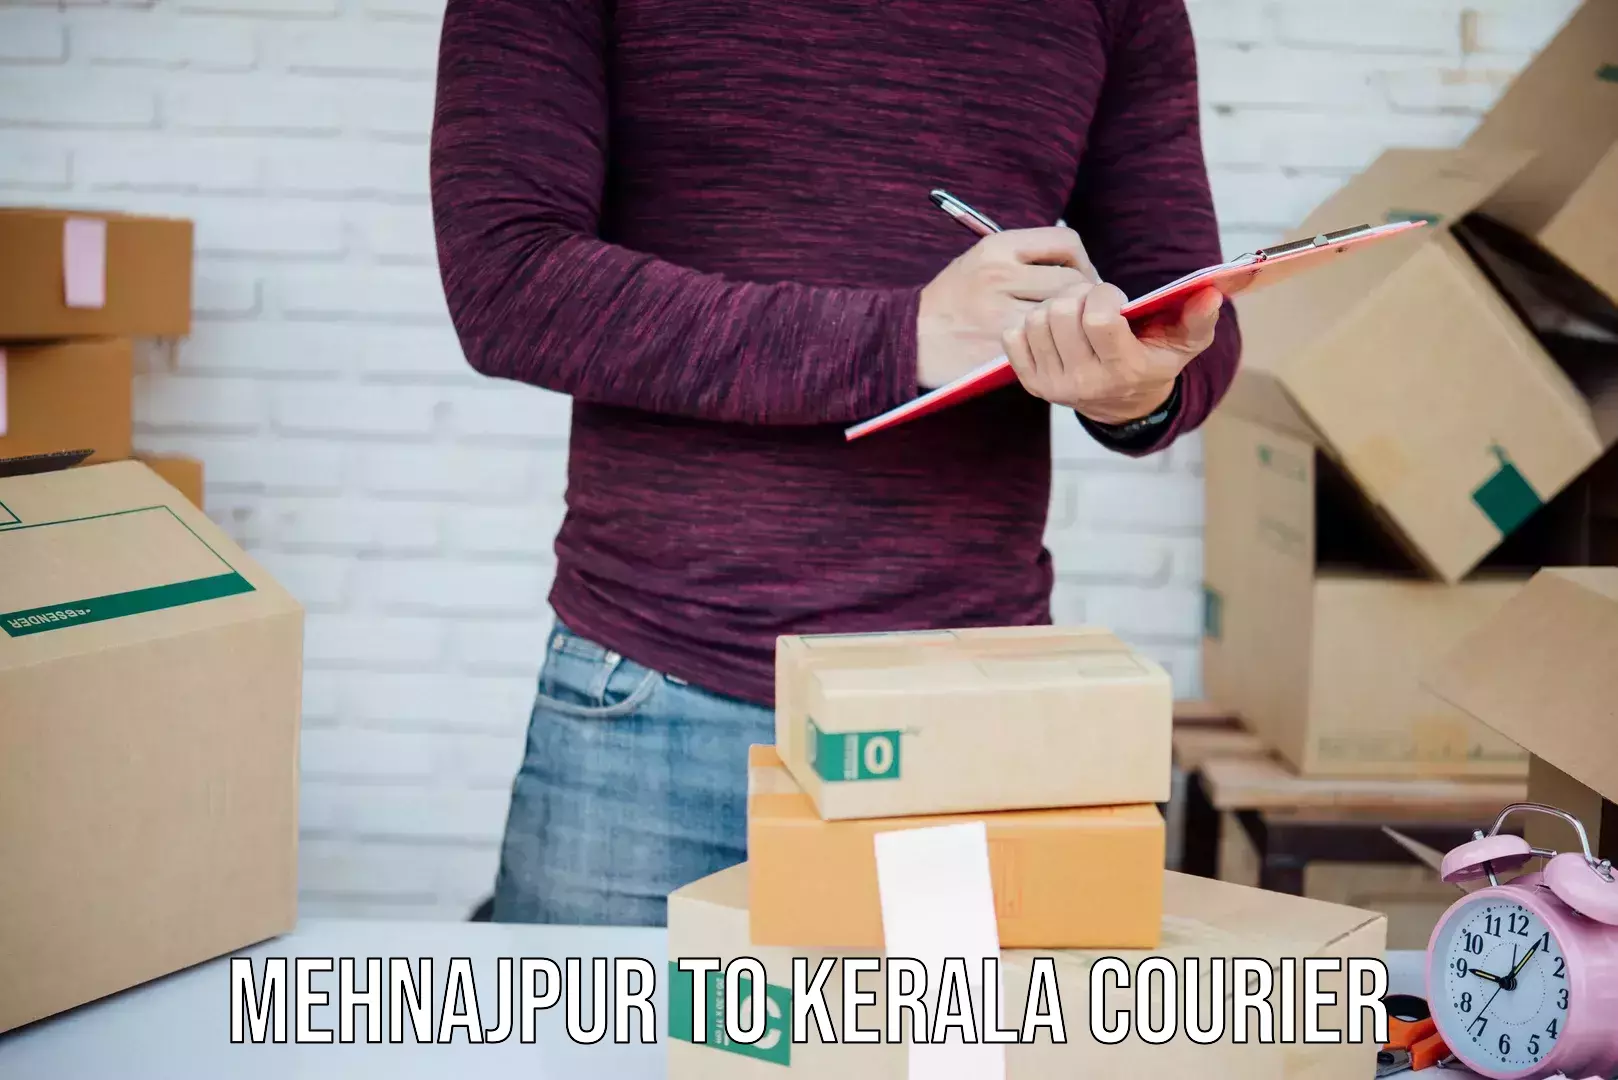 Doorstep delivery service Mehnajpur to Kerala